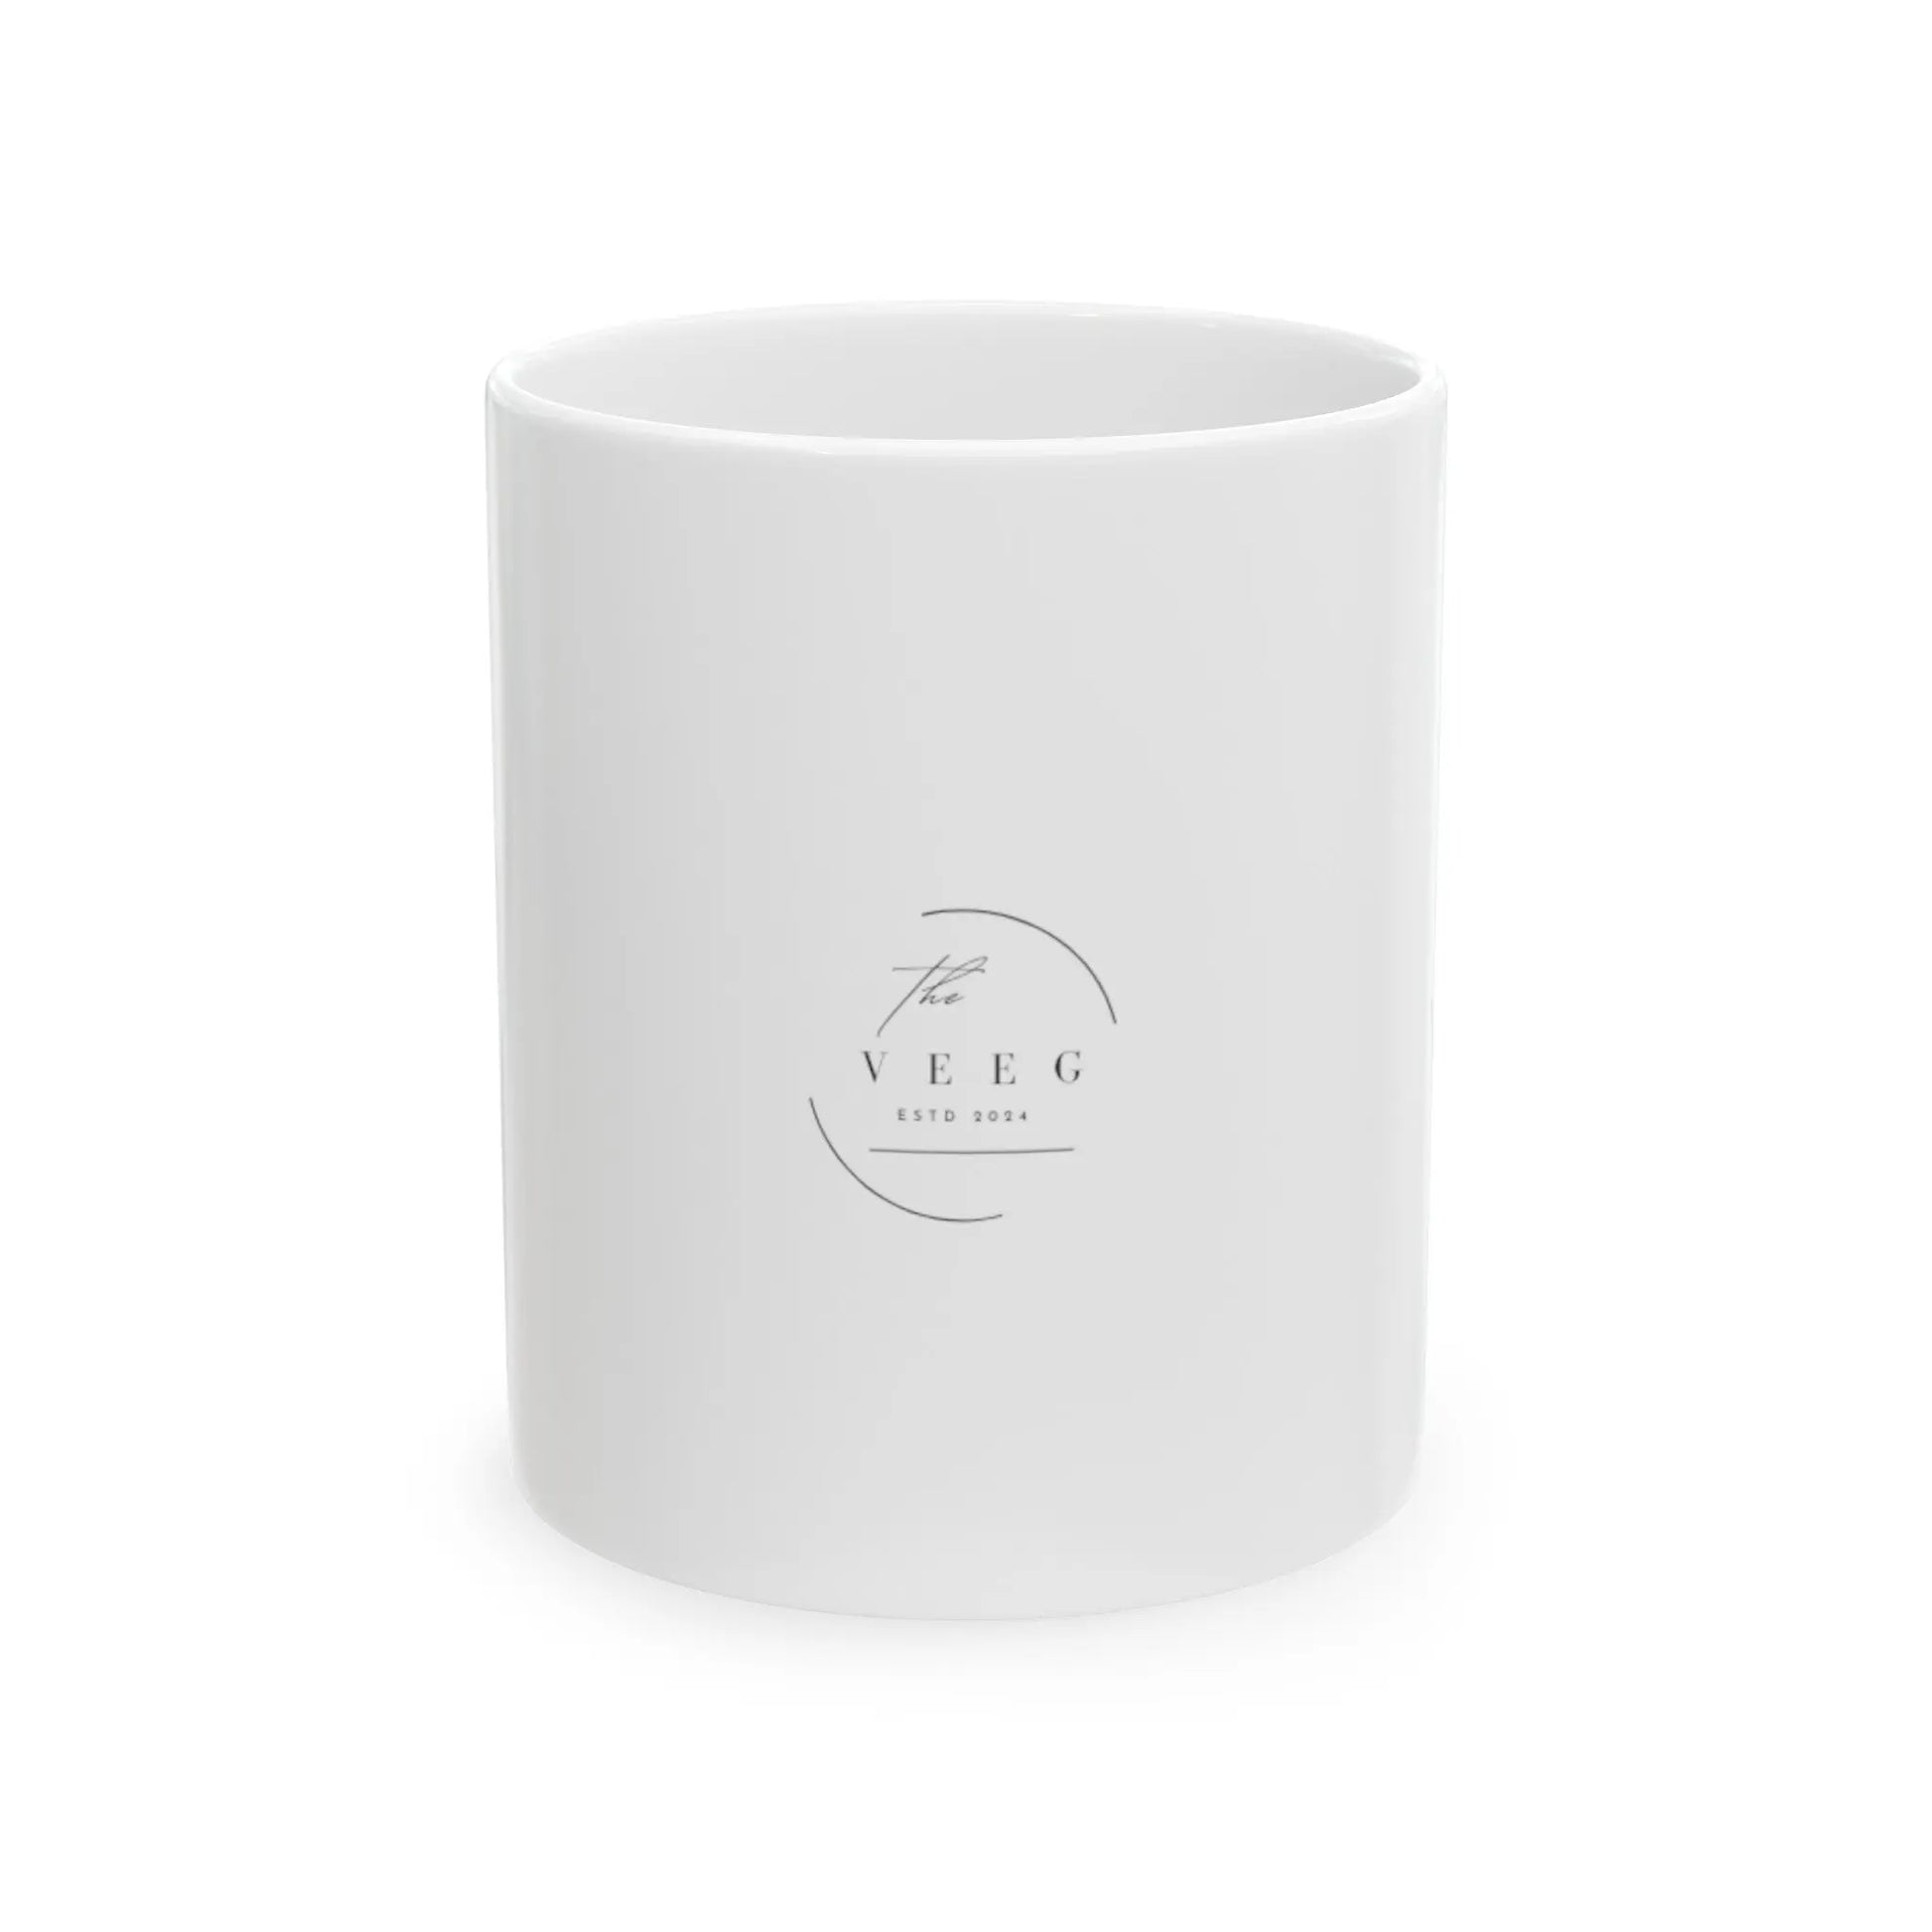 Ceramic Mug, (11oz, 15oz) - THE VEEG